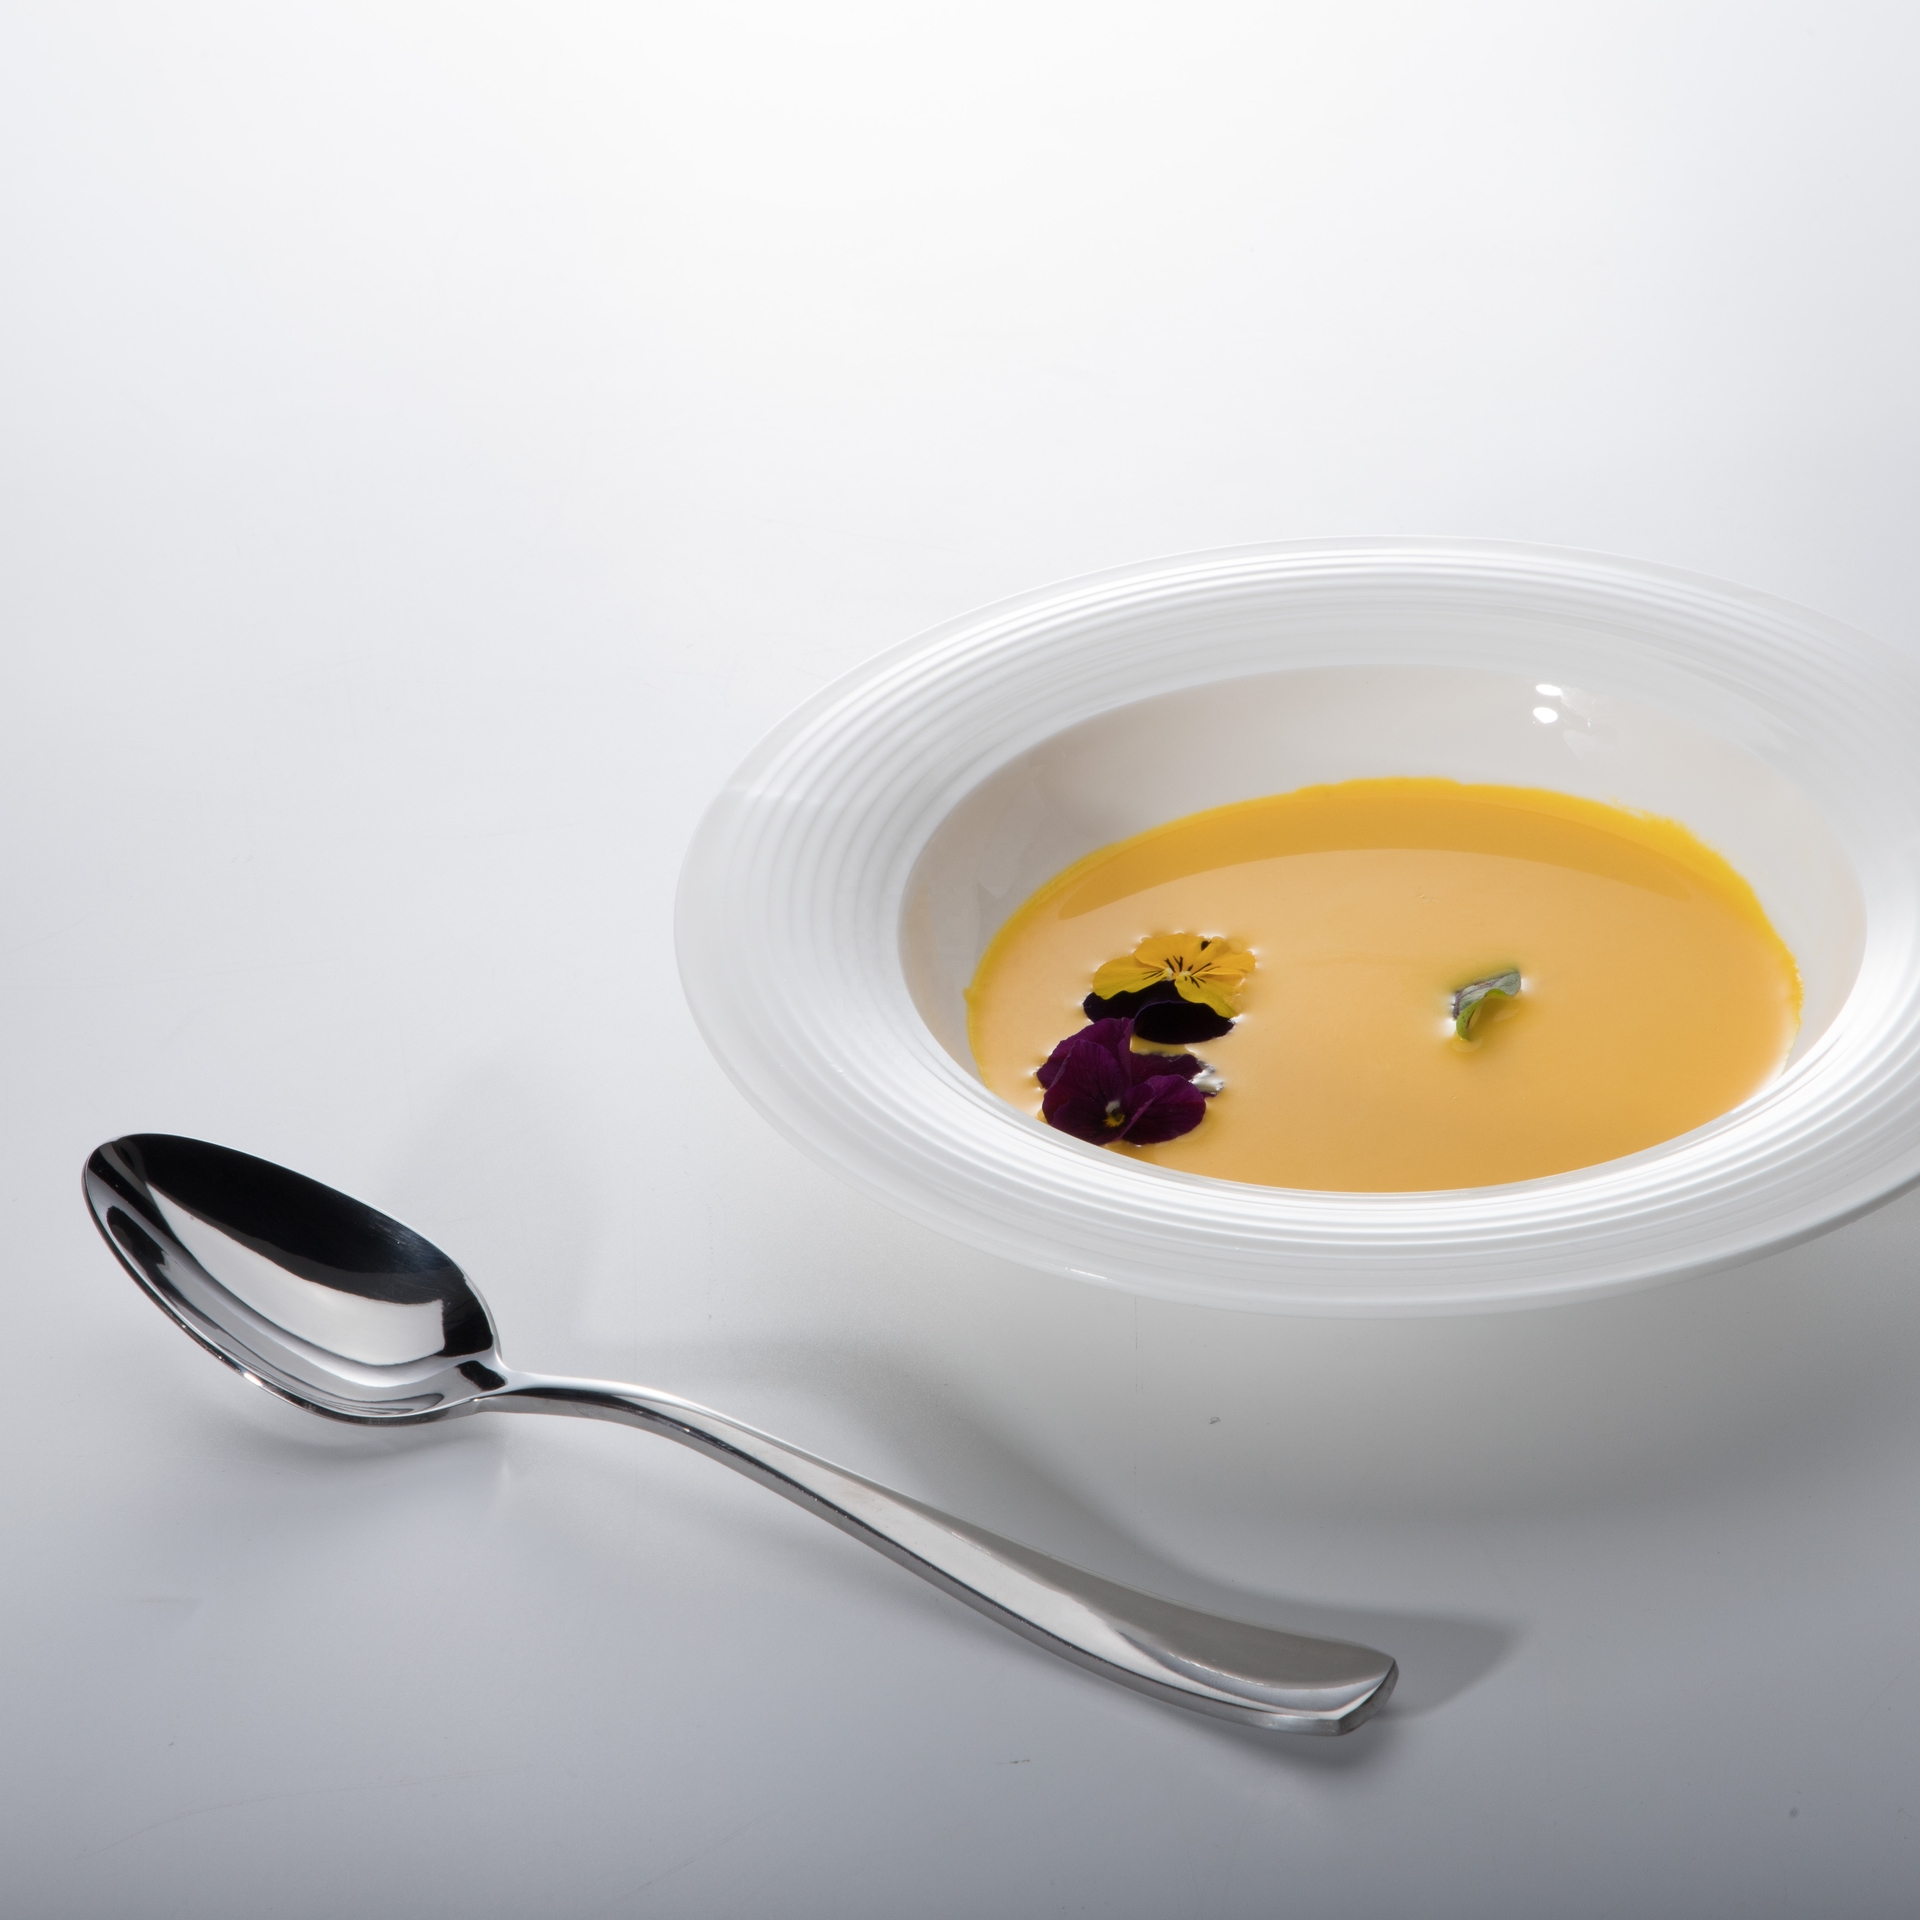 New Available Ceramic Dish Custom Printed Restaurant Dinnerware Soup Plates#